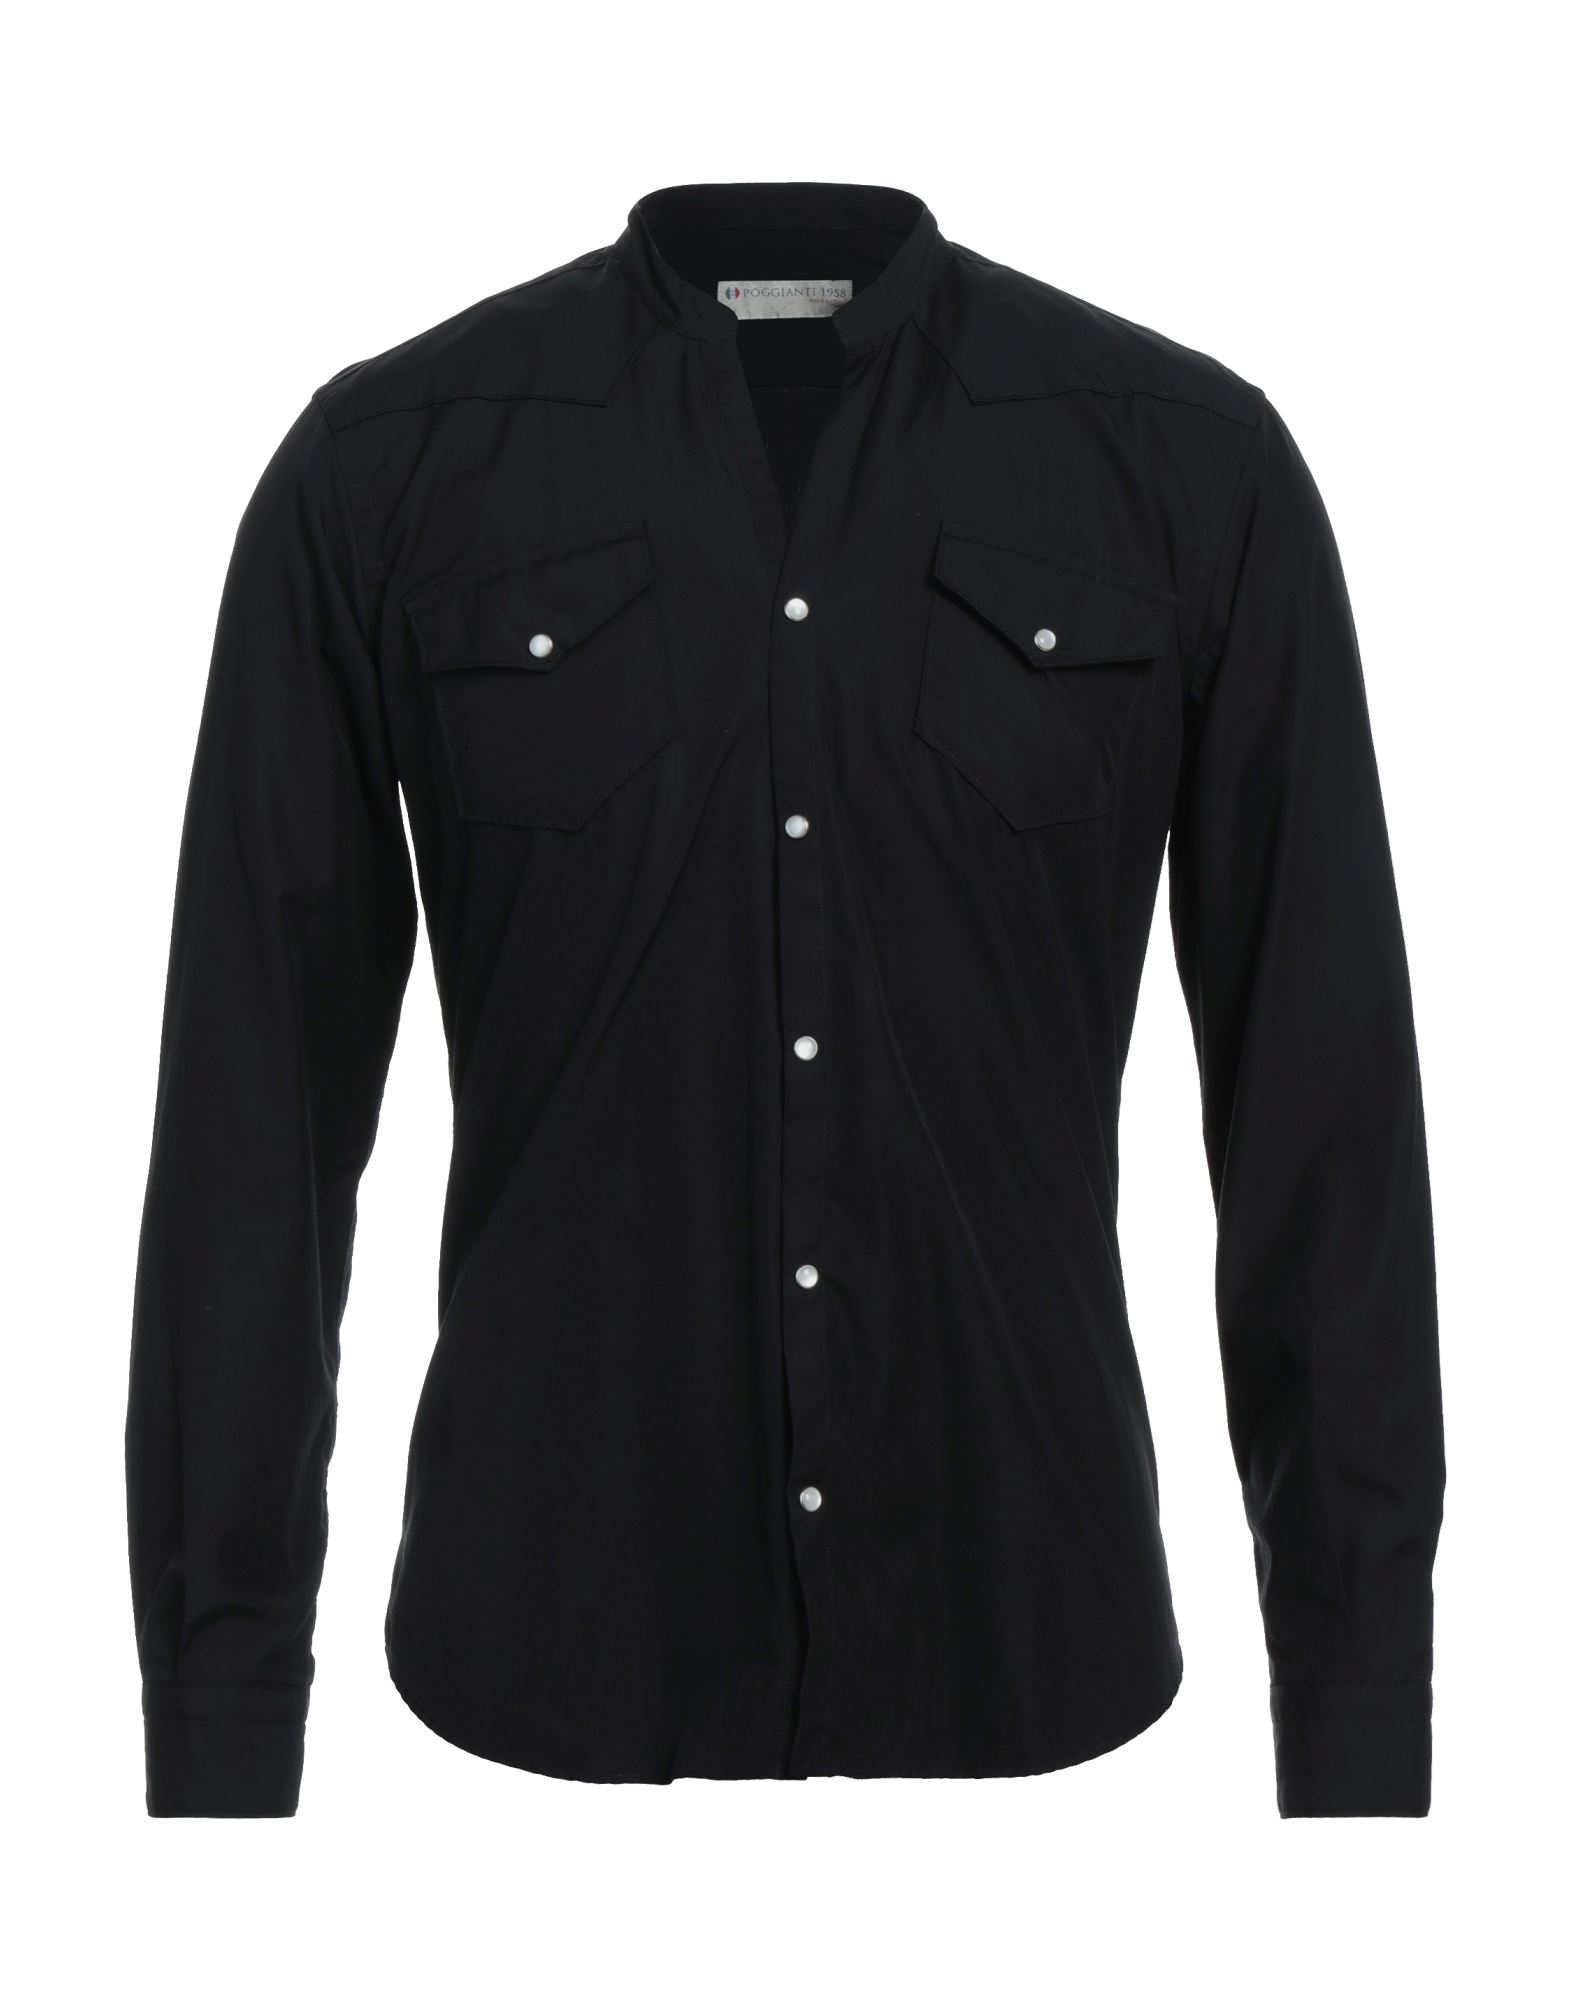 Poggianti Shirts In Black | ModeSens